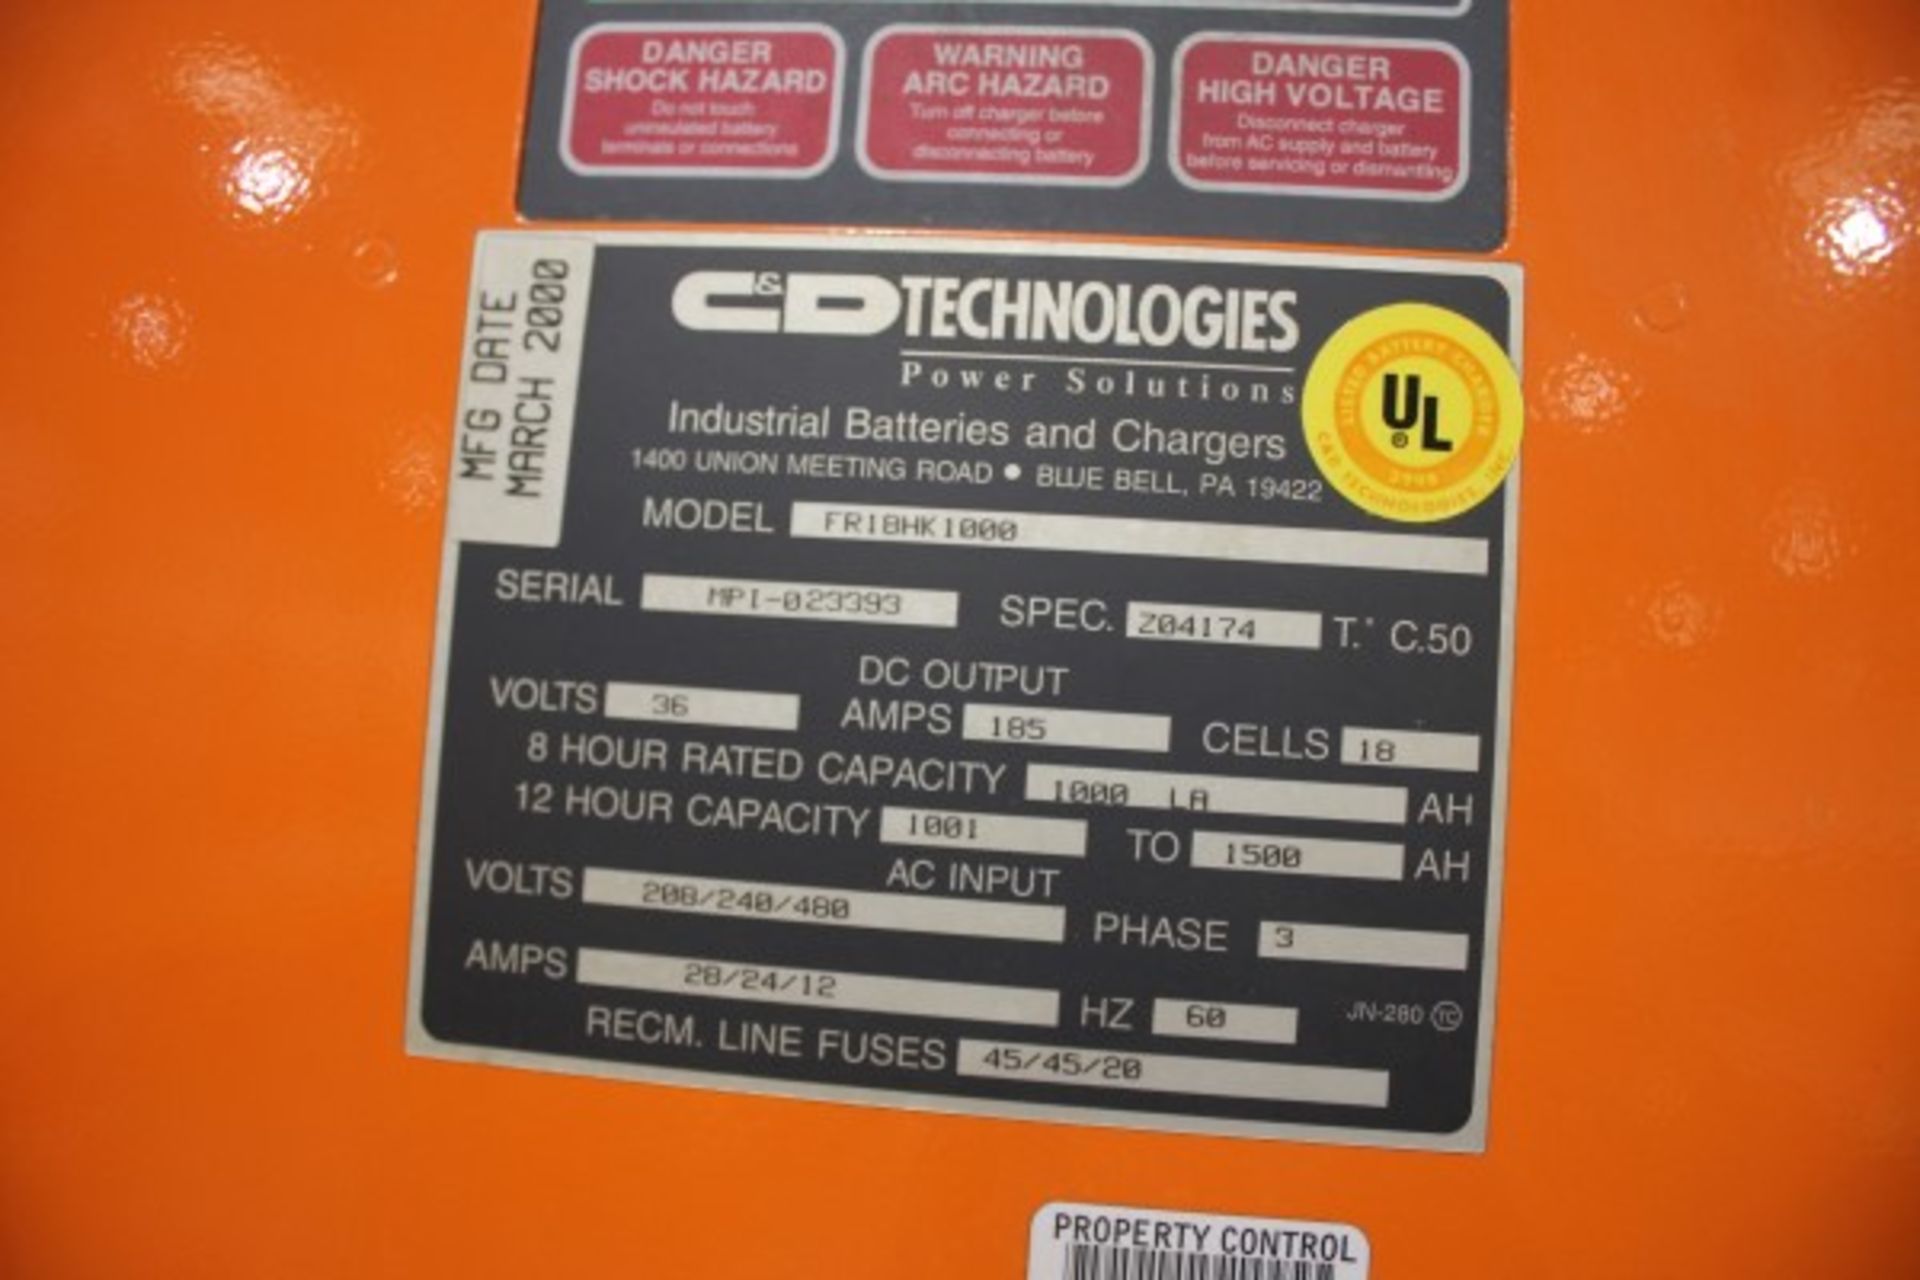 C&D Technologies 36 Volt Battery Charger, M# FR18HK1000, S/N MPI-023393, 185 Amp | Loading Fee: $5 - Image 2 of 2